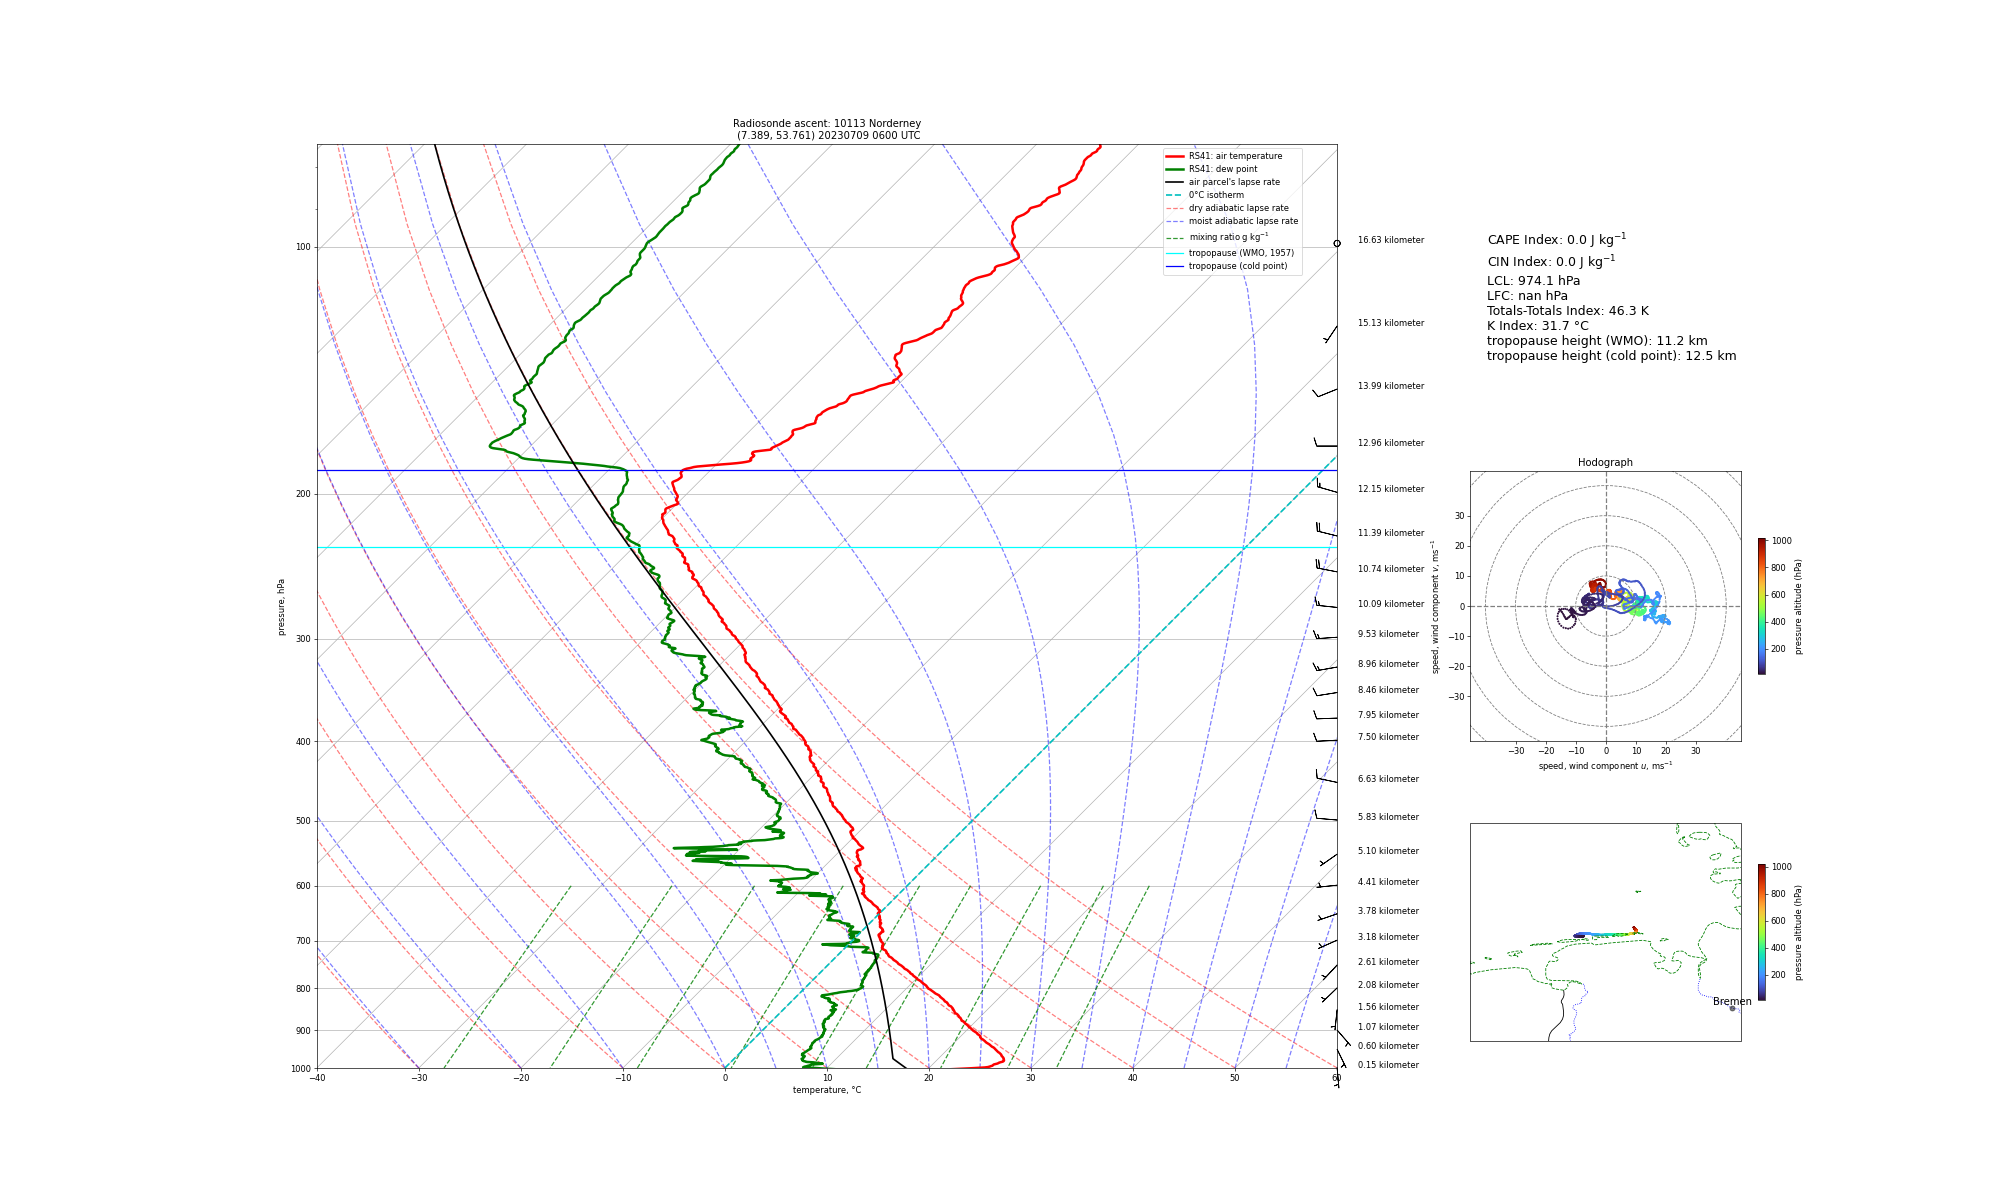 Visualisation of the radiosounding profile at Norderney at 0600 UTC